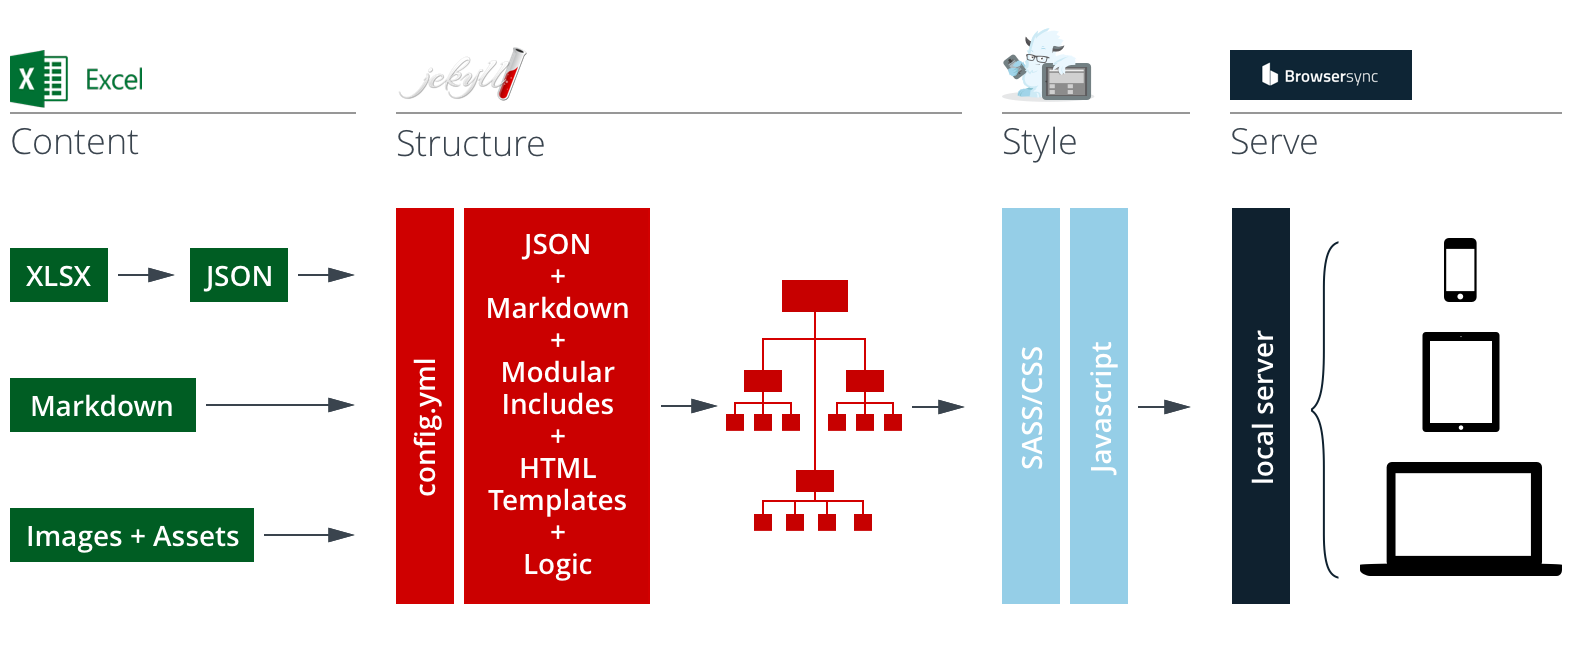 A1 content. Архитектура сайта. Content structure. Markdown json. Content structuring UI.